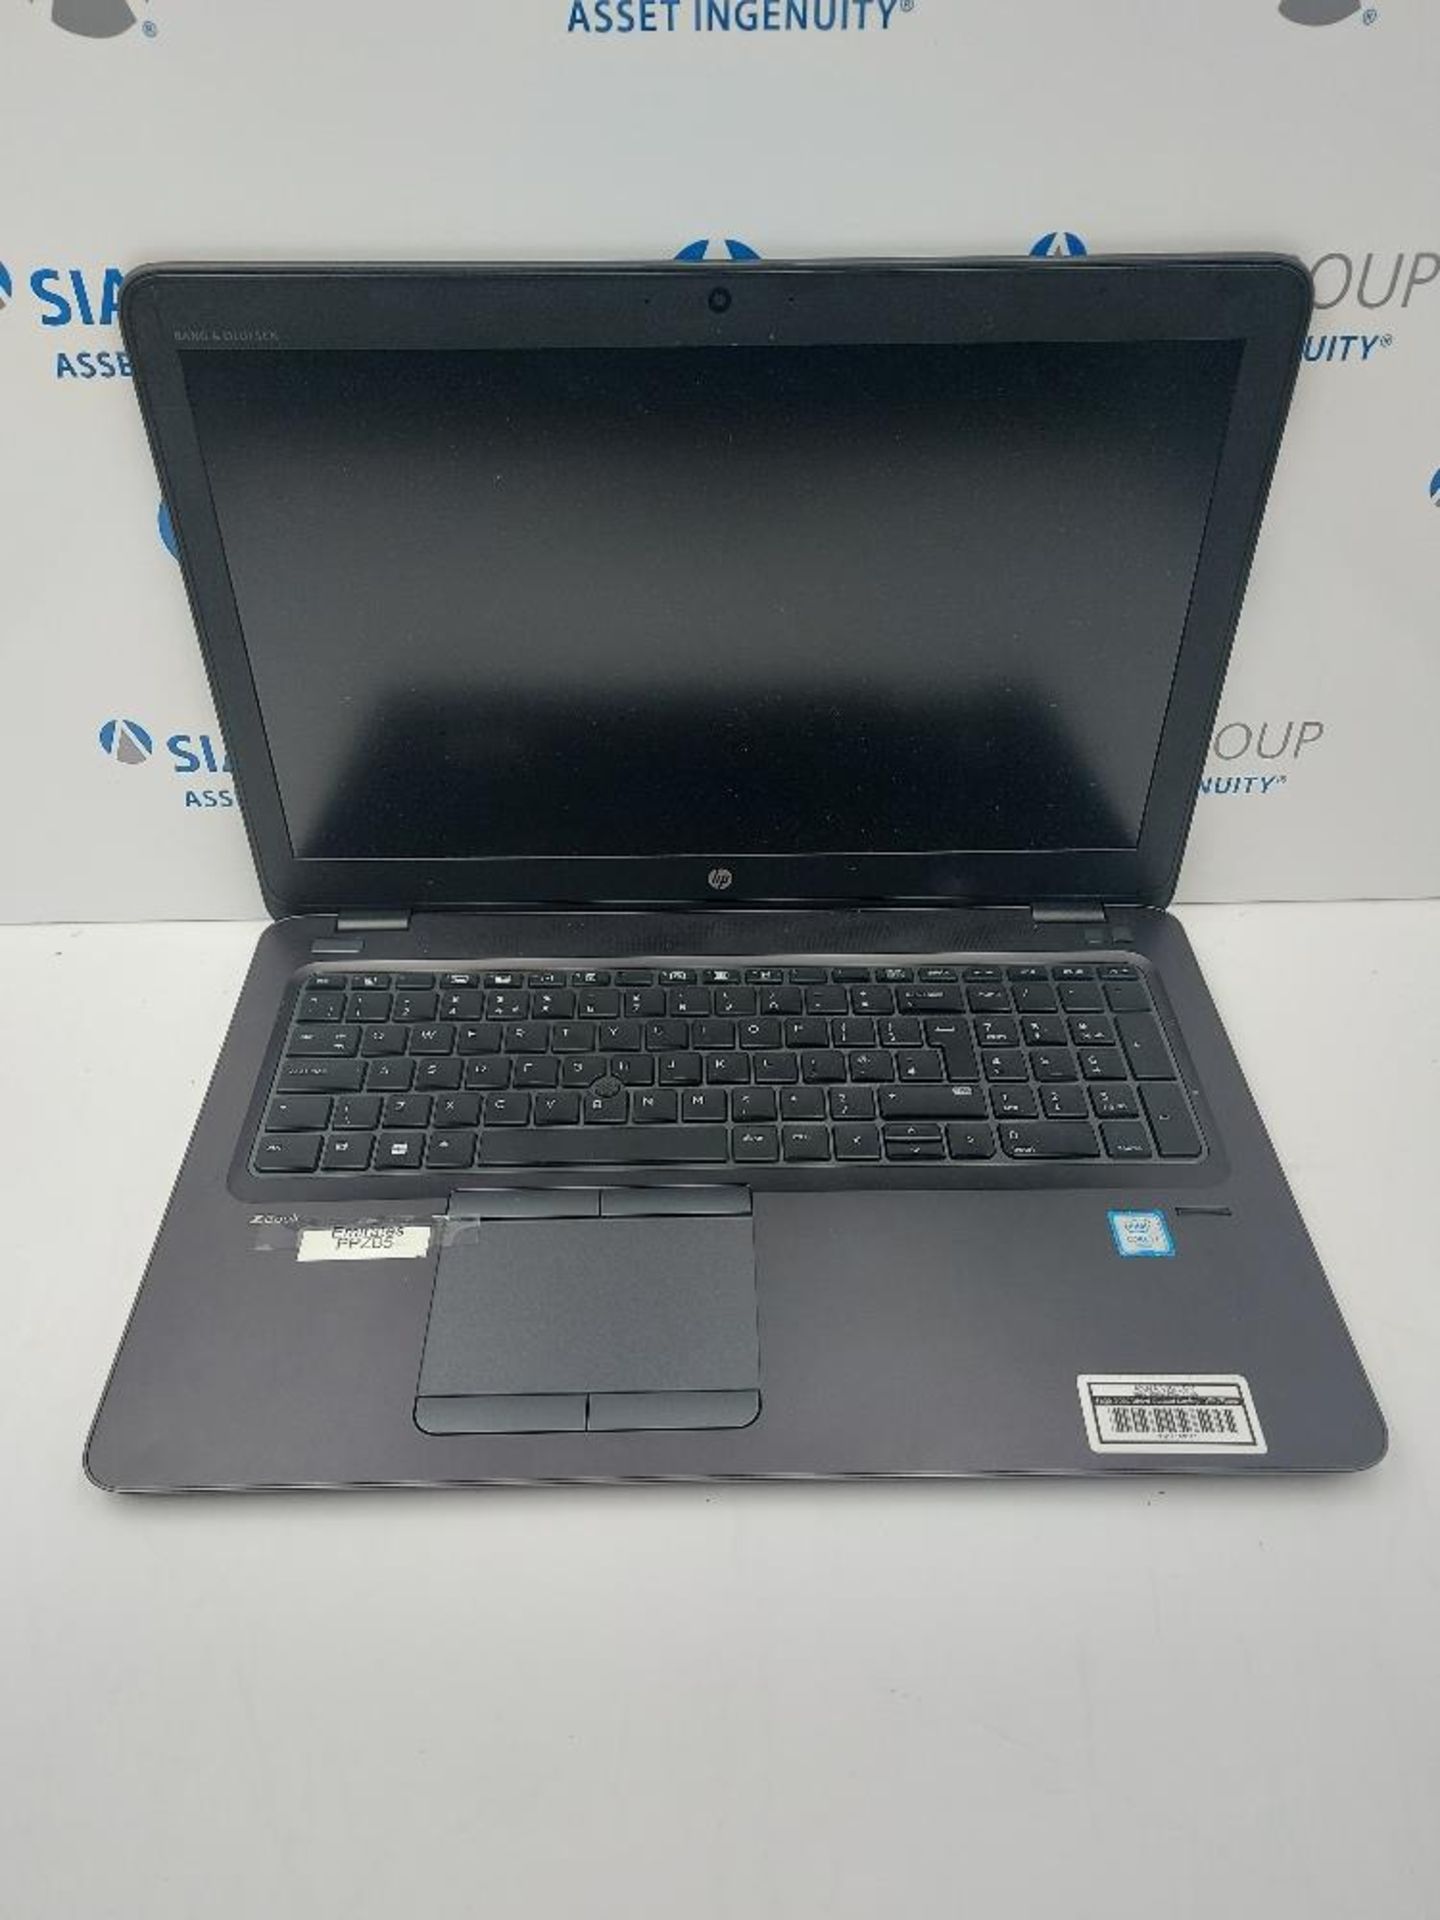 HP Zbook 15u G3 Laptop with Flight Case - Image 3 of 7